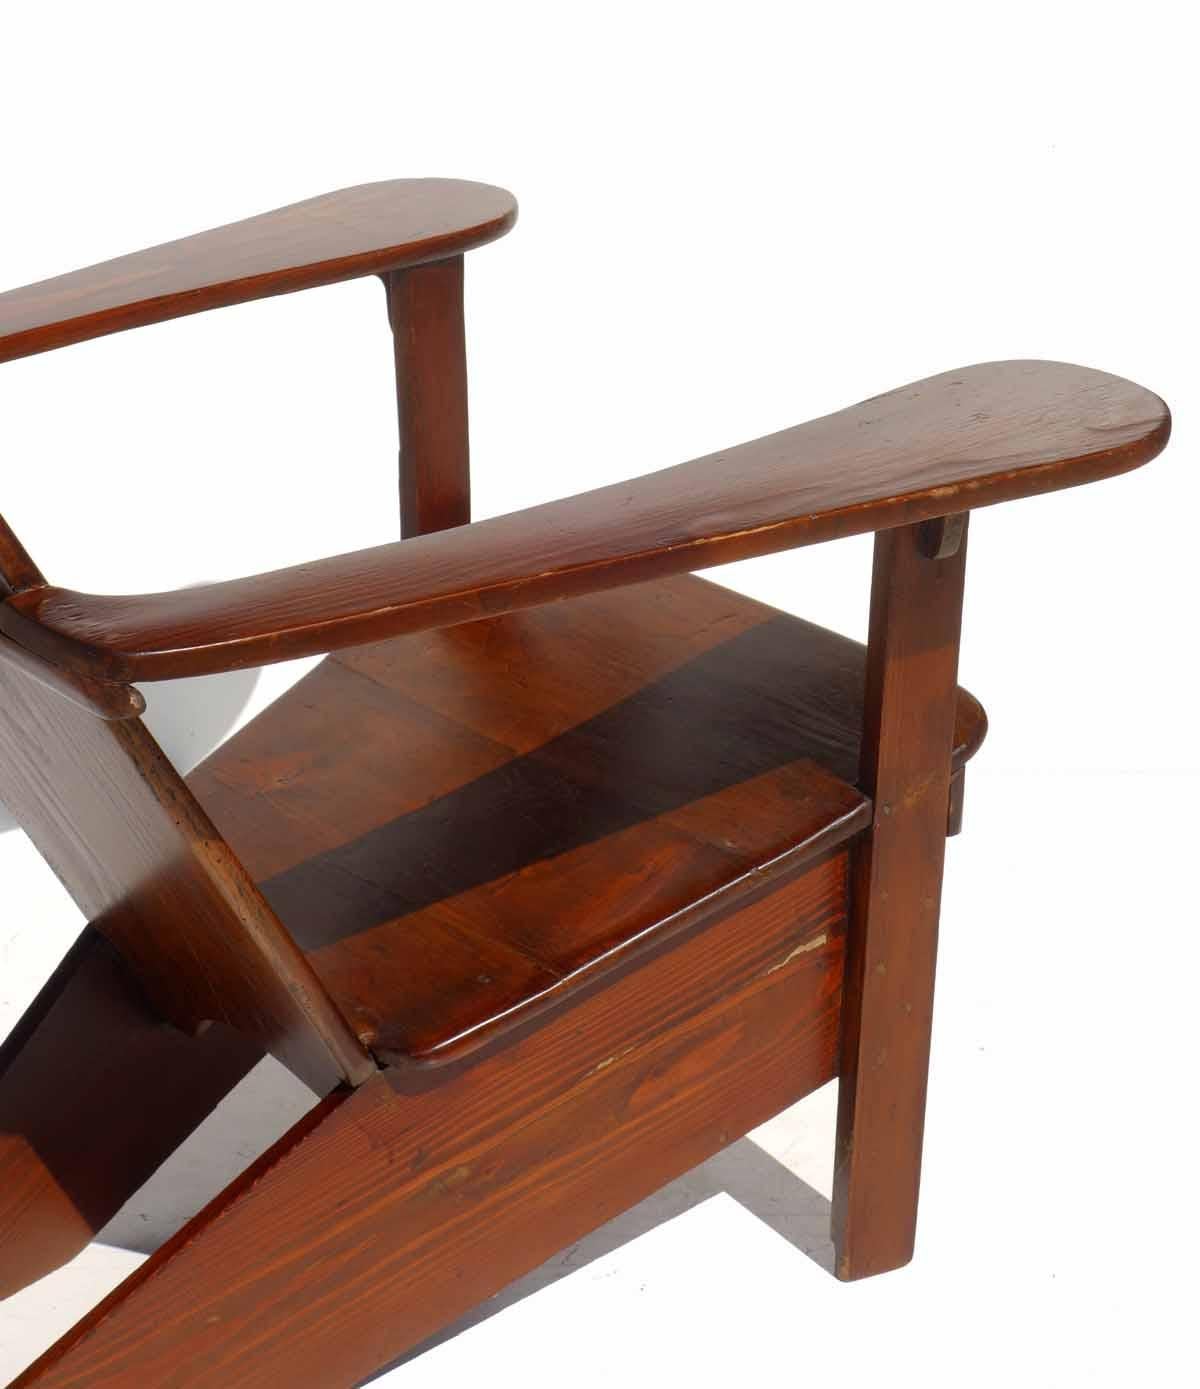 1930s Gino Levi Montalcini Italian Design Rationalist Wood Lounge Chair For Sale 3